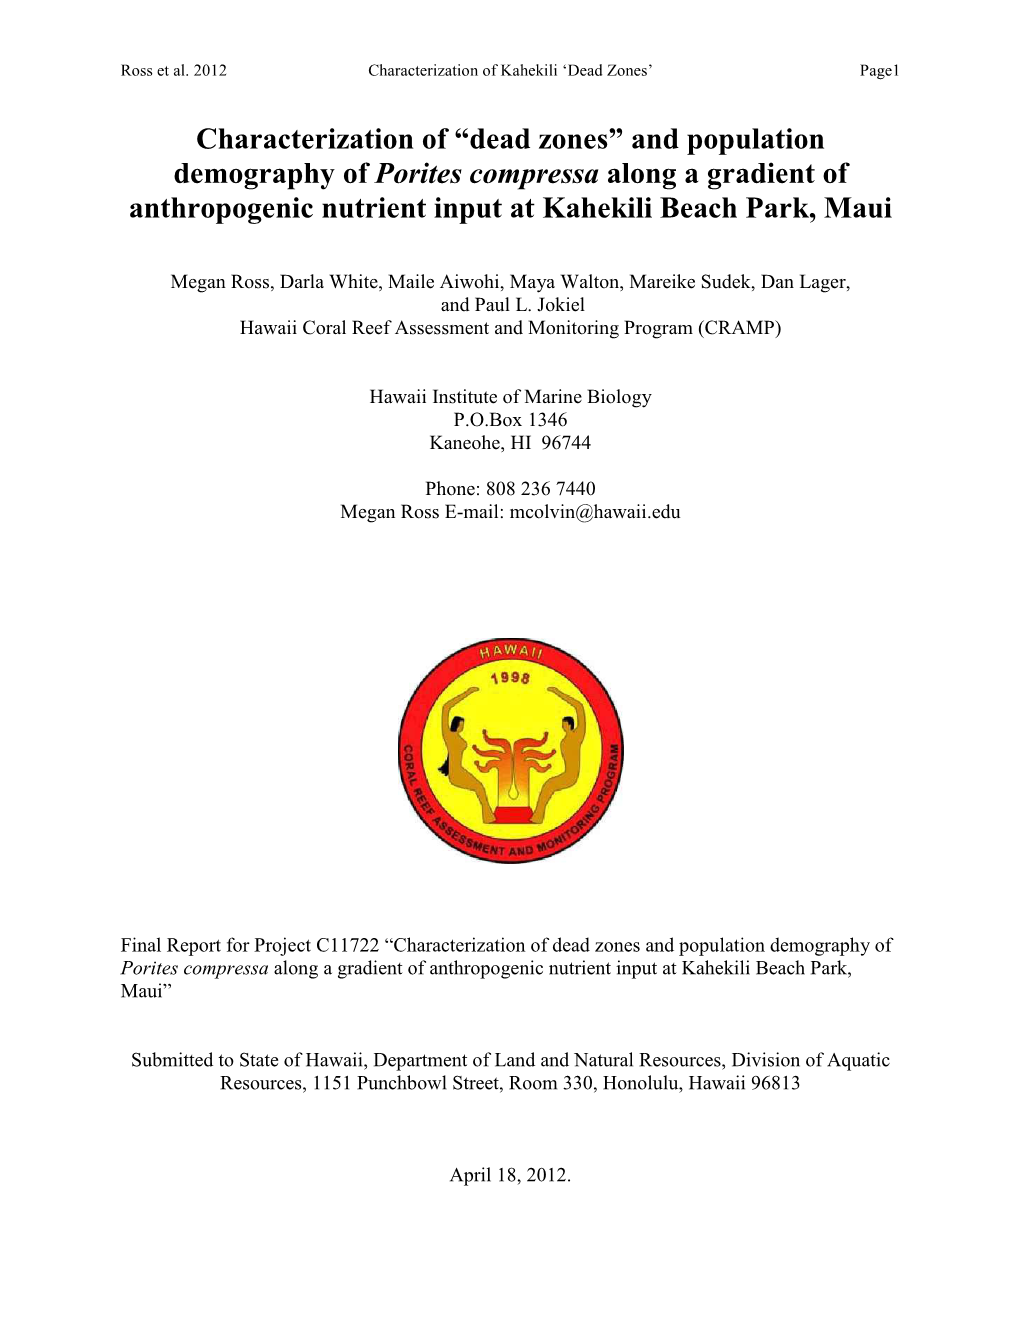 “Dead Zones” and Population Demography of Porites Compressa Along a Gradient of Anthropogenic Nutrient Input at Kahekili Beach Park, Maui